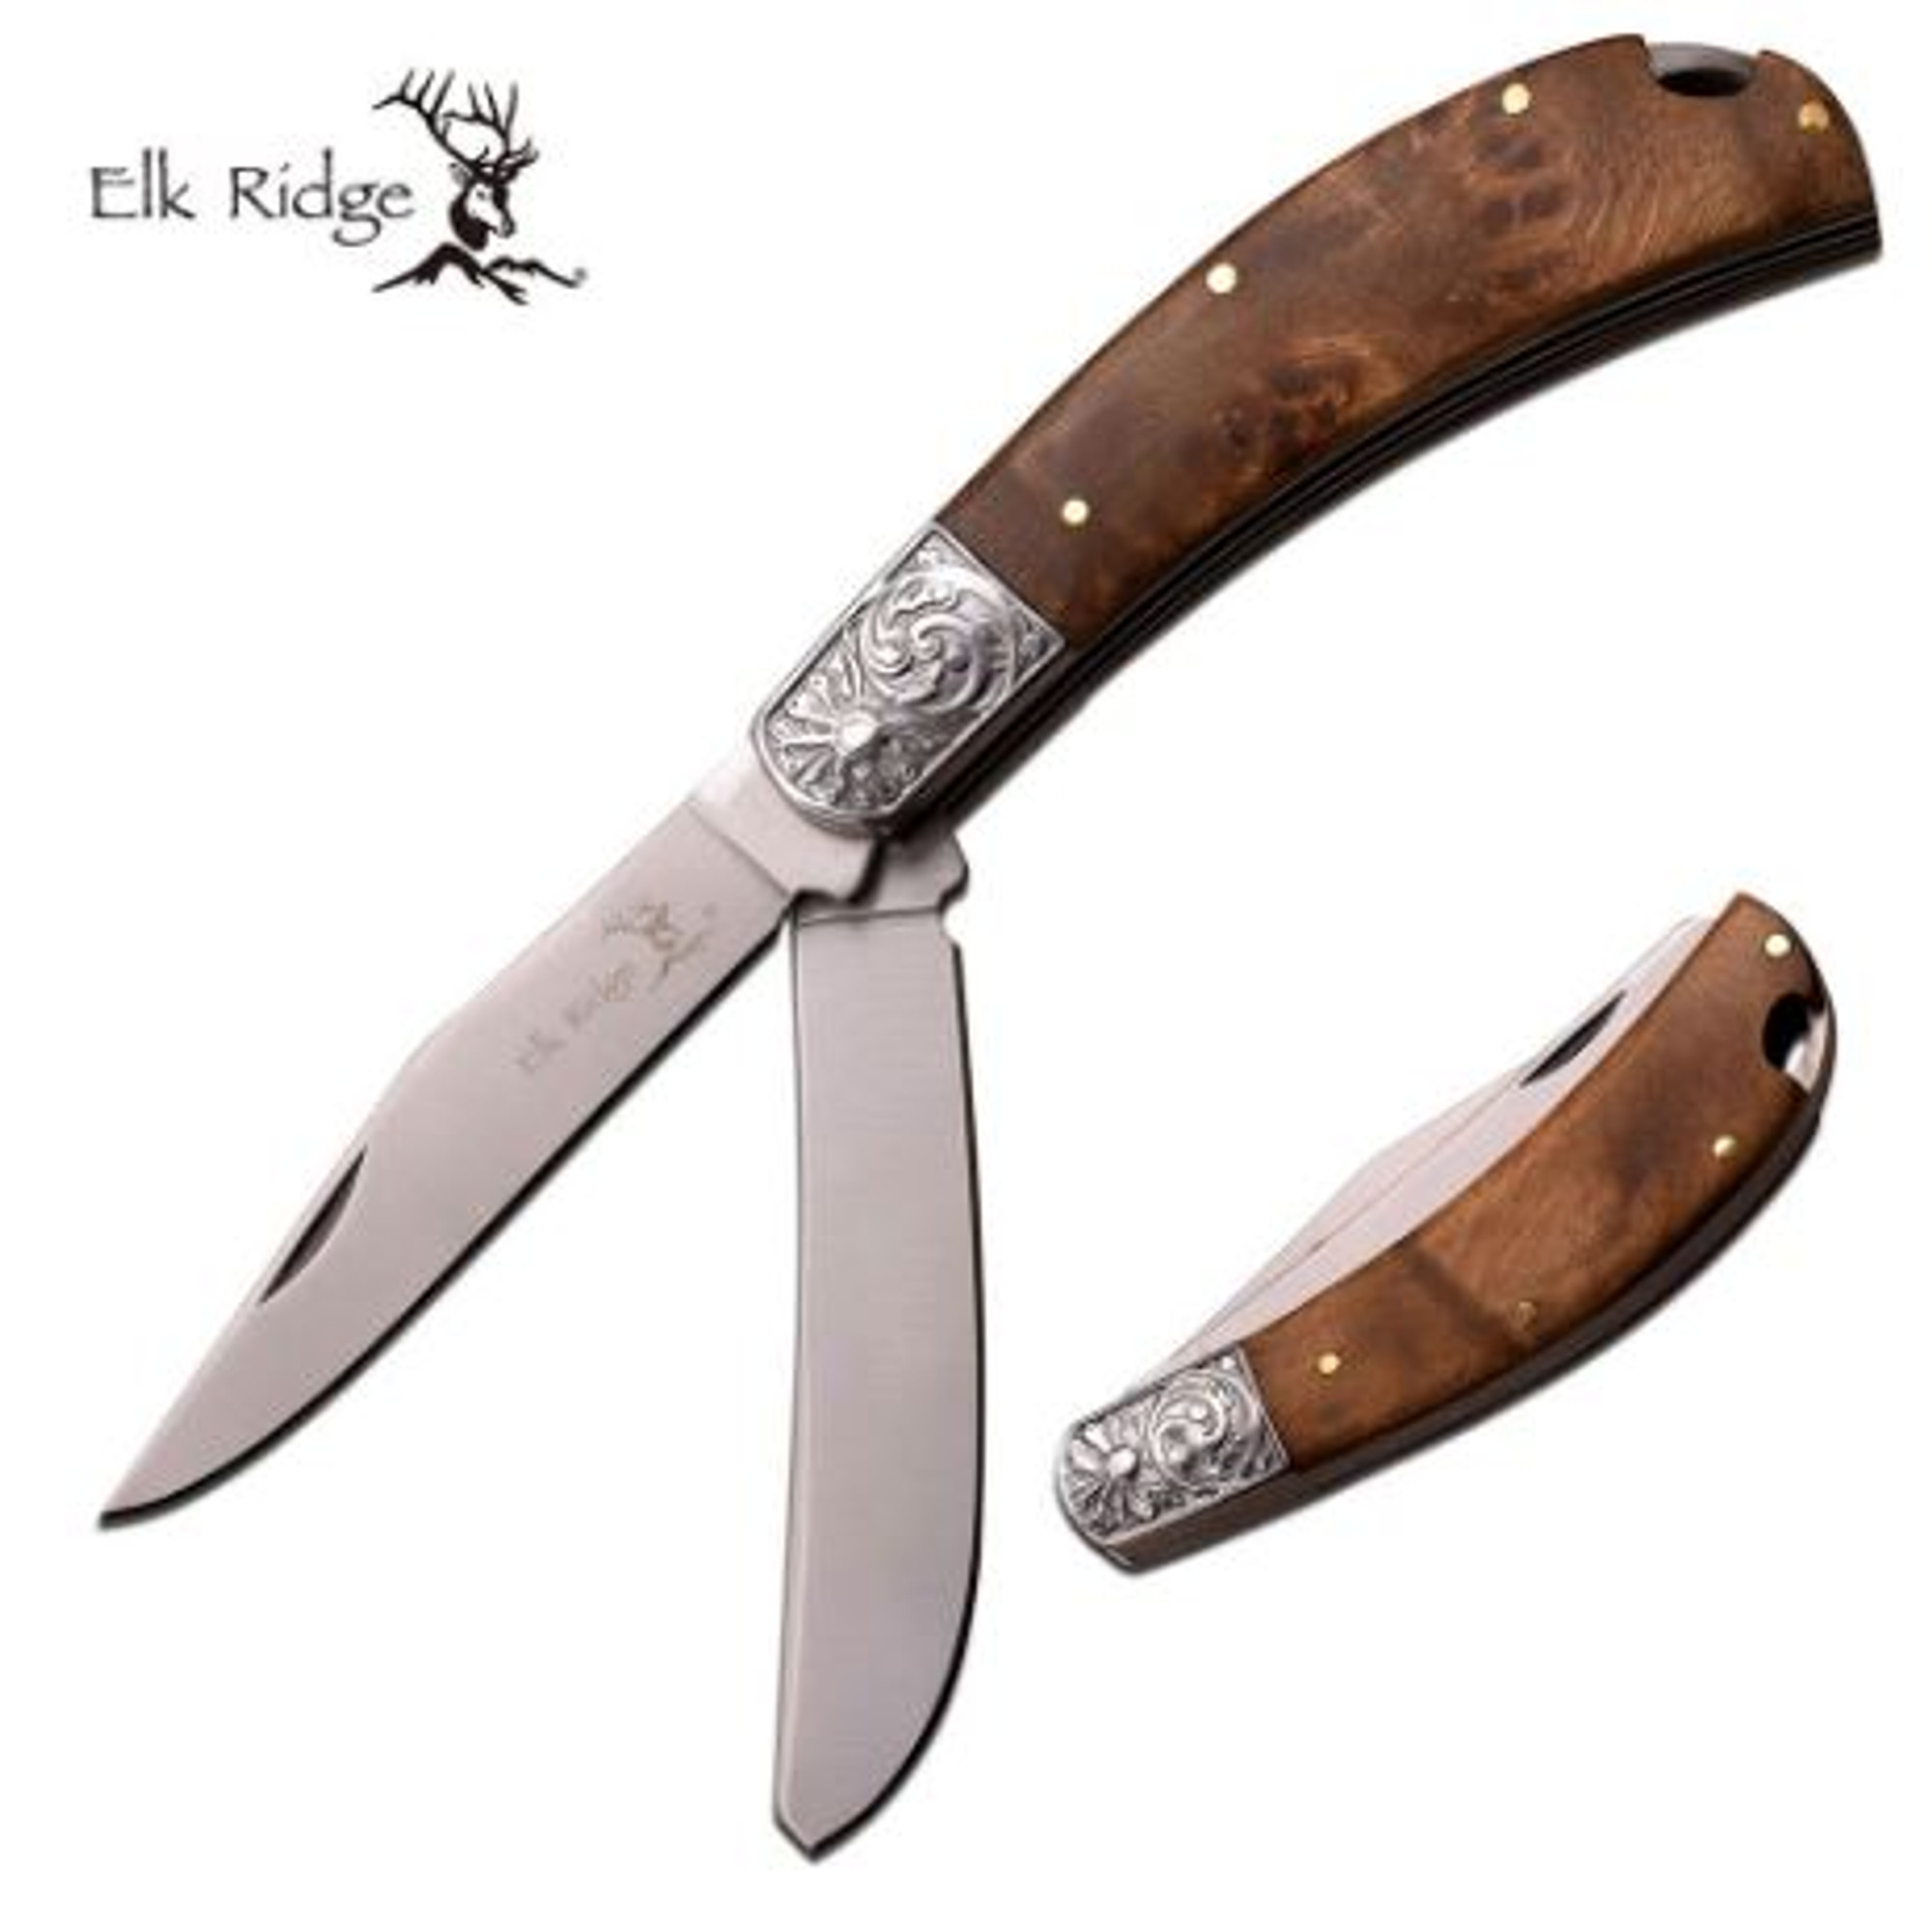 Elk Ridge ER552BW Pocket Knife - Burl Wood